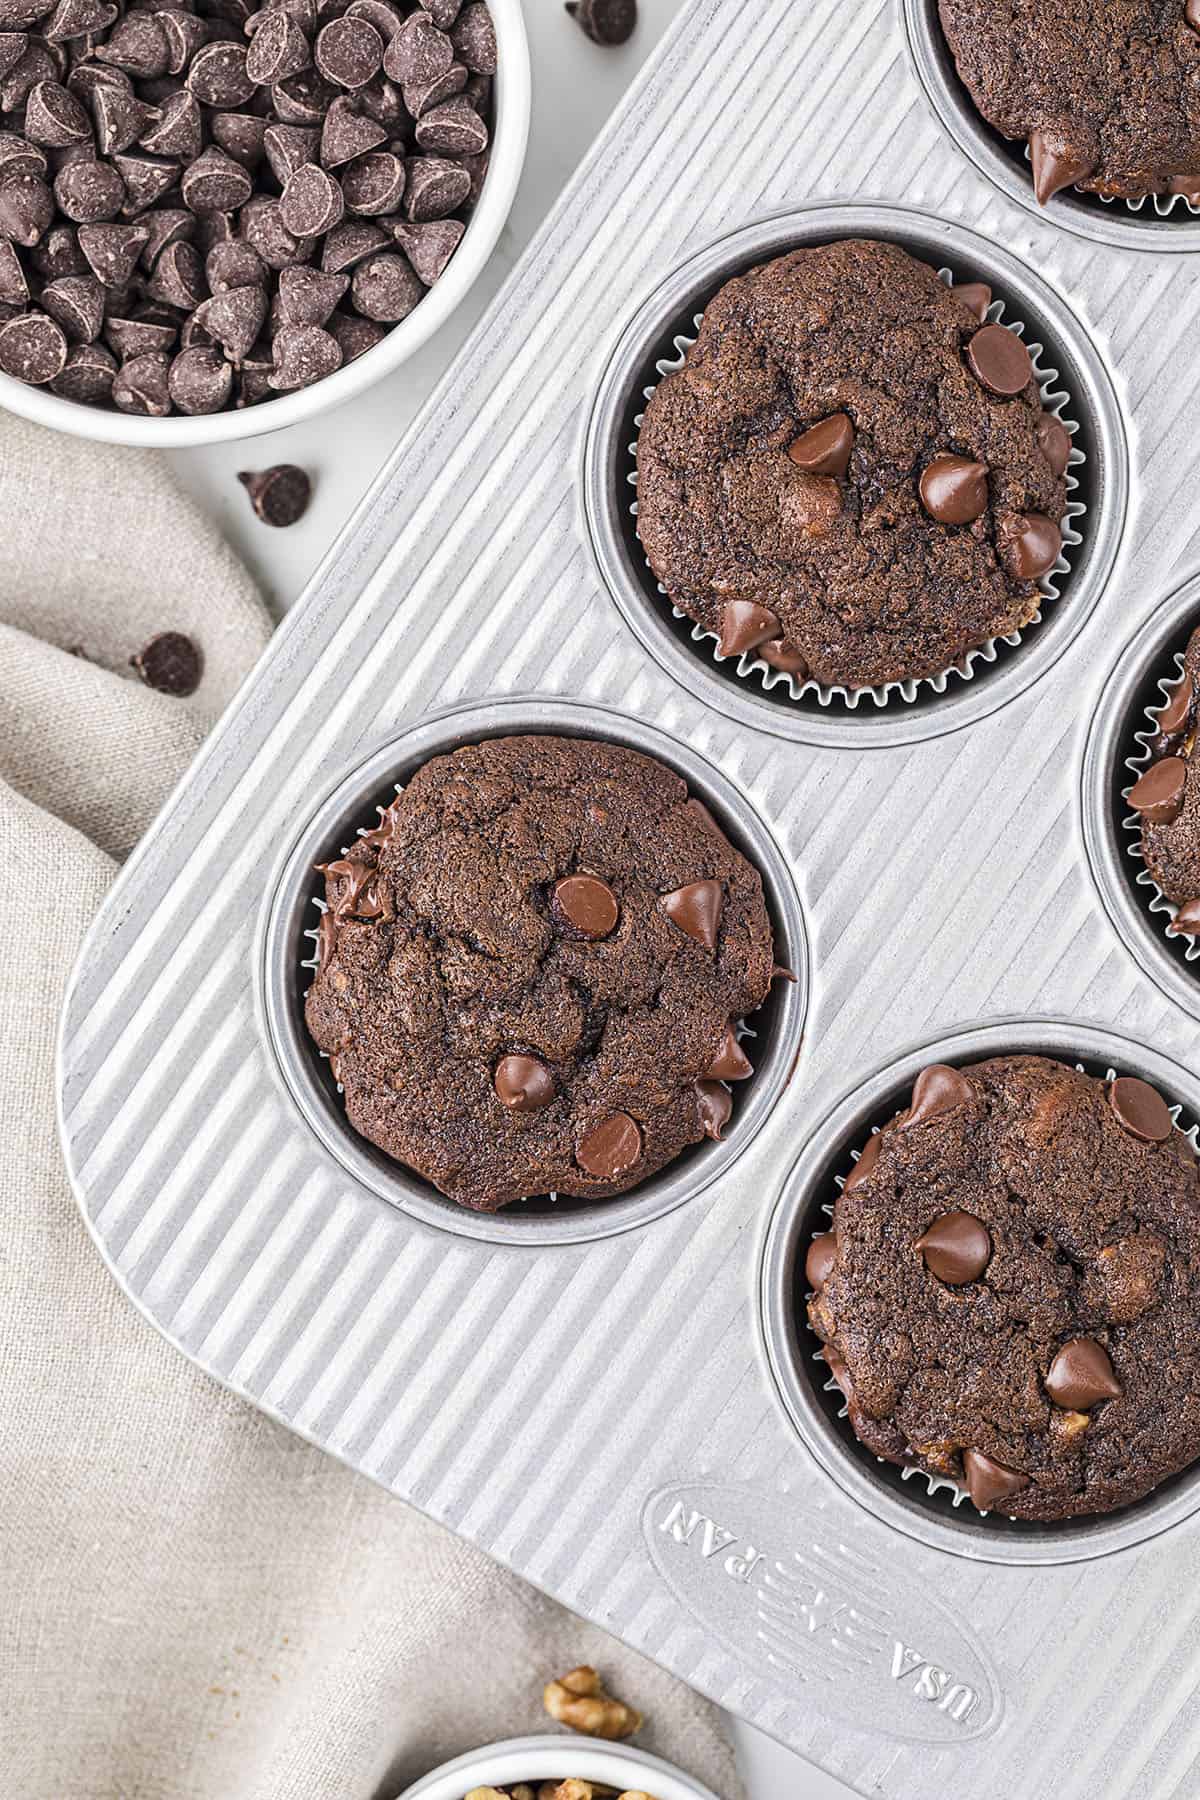 Baked chocolate banana muffins in muffin tin.